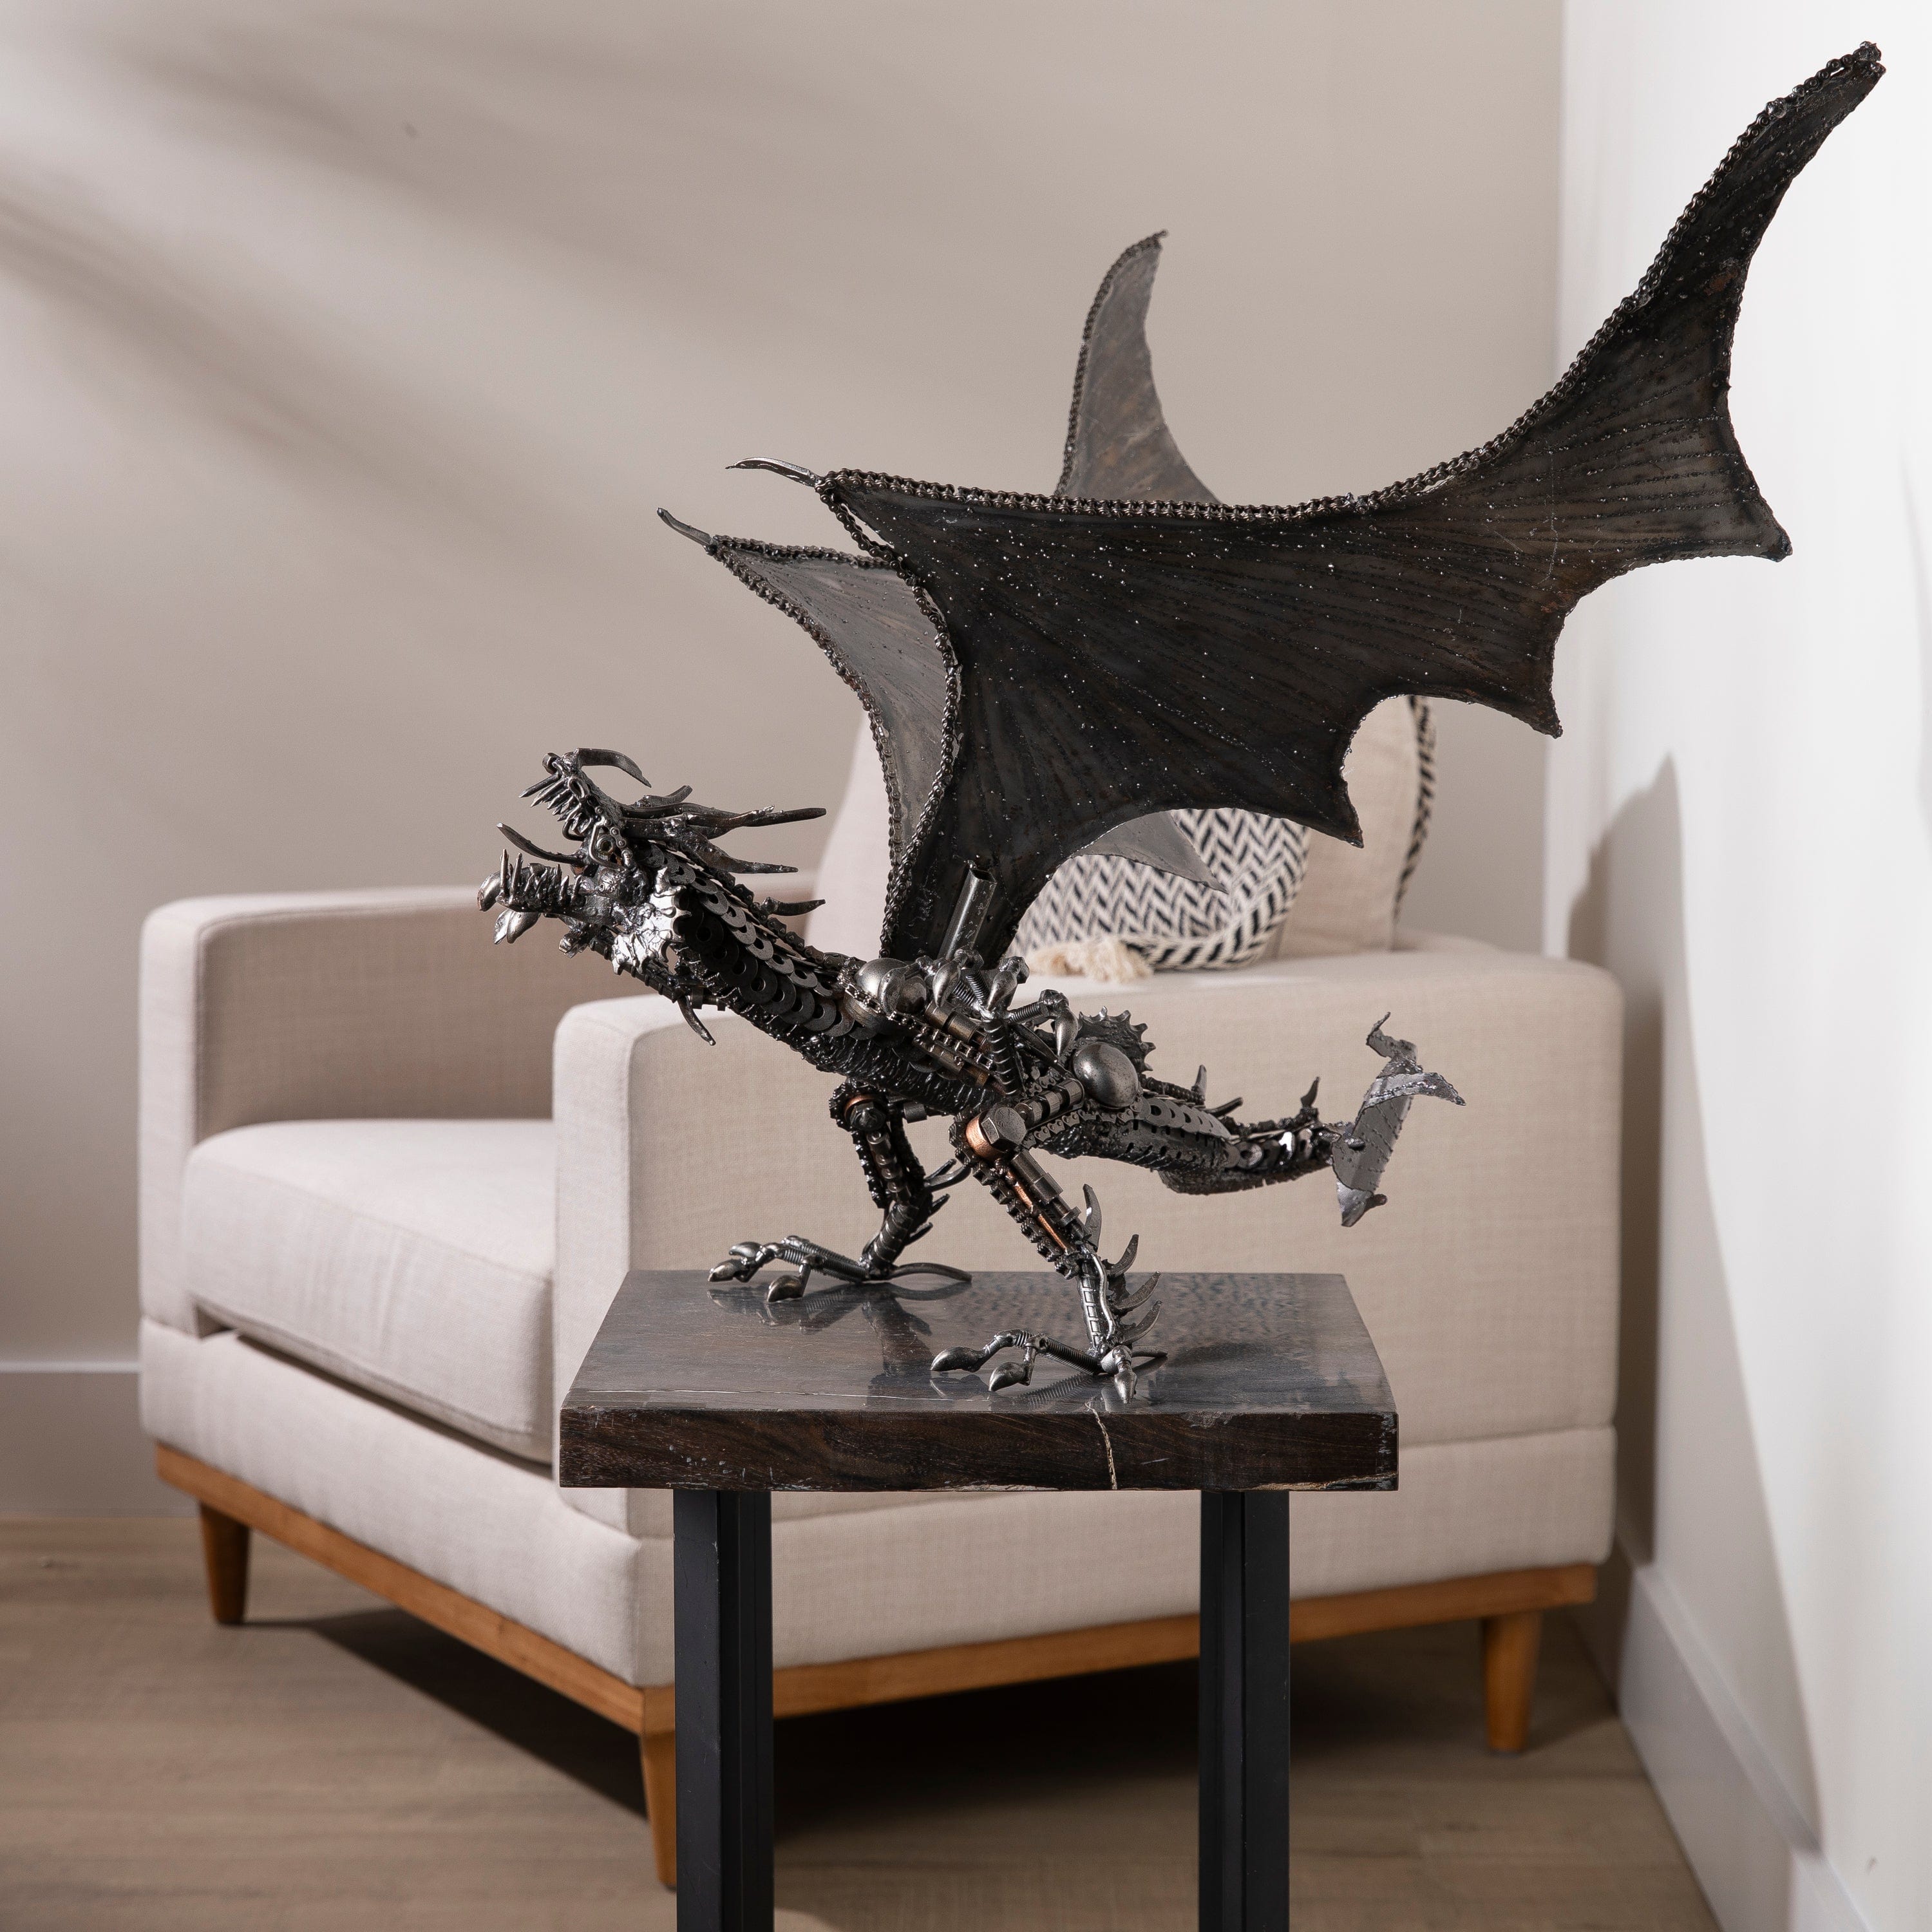 Kalifano Recycled Metal Art Dragon Recycled Metal Art Sculpture RMS-D59x70-S